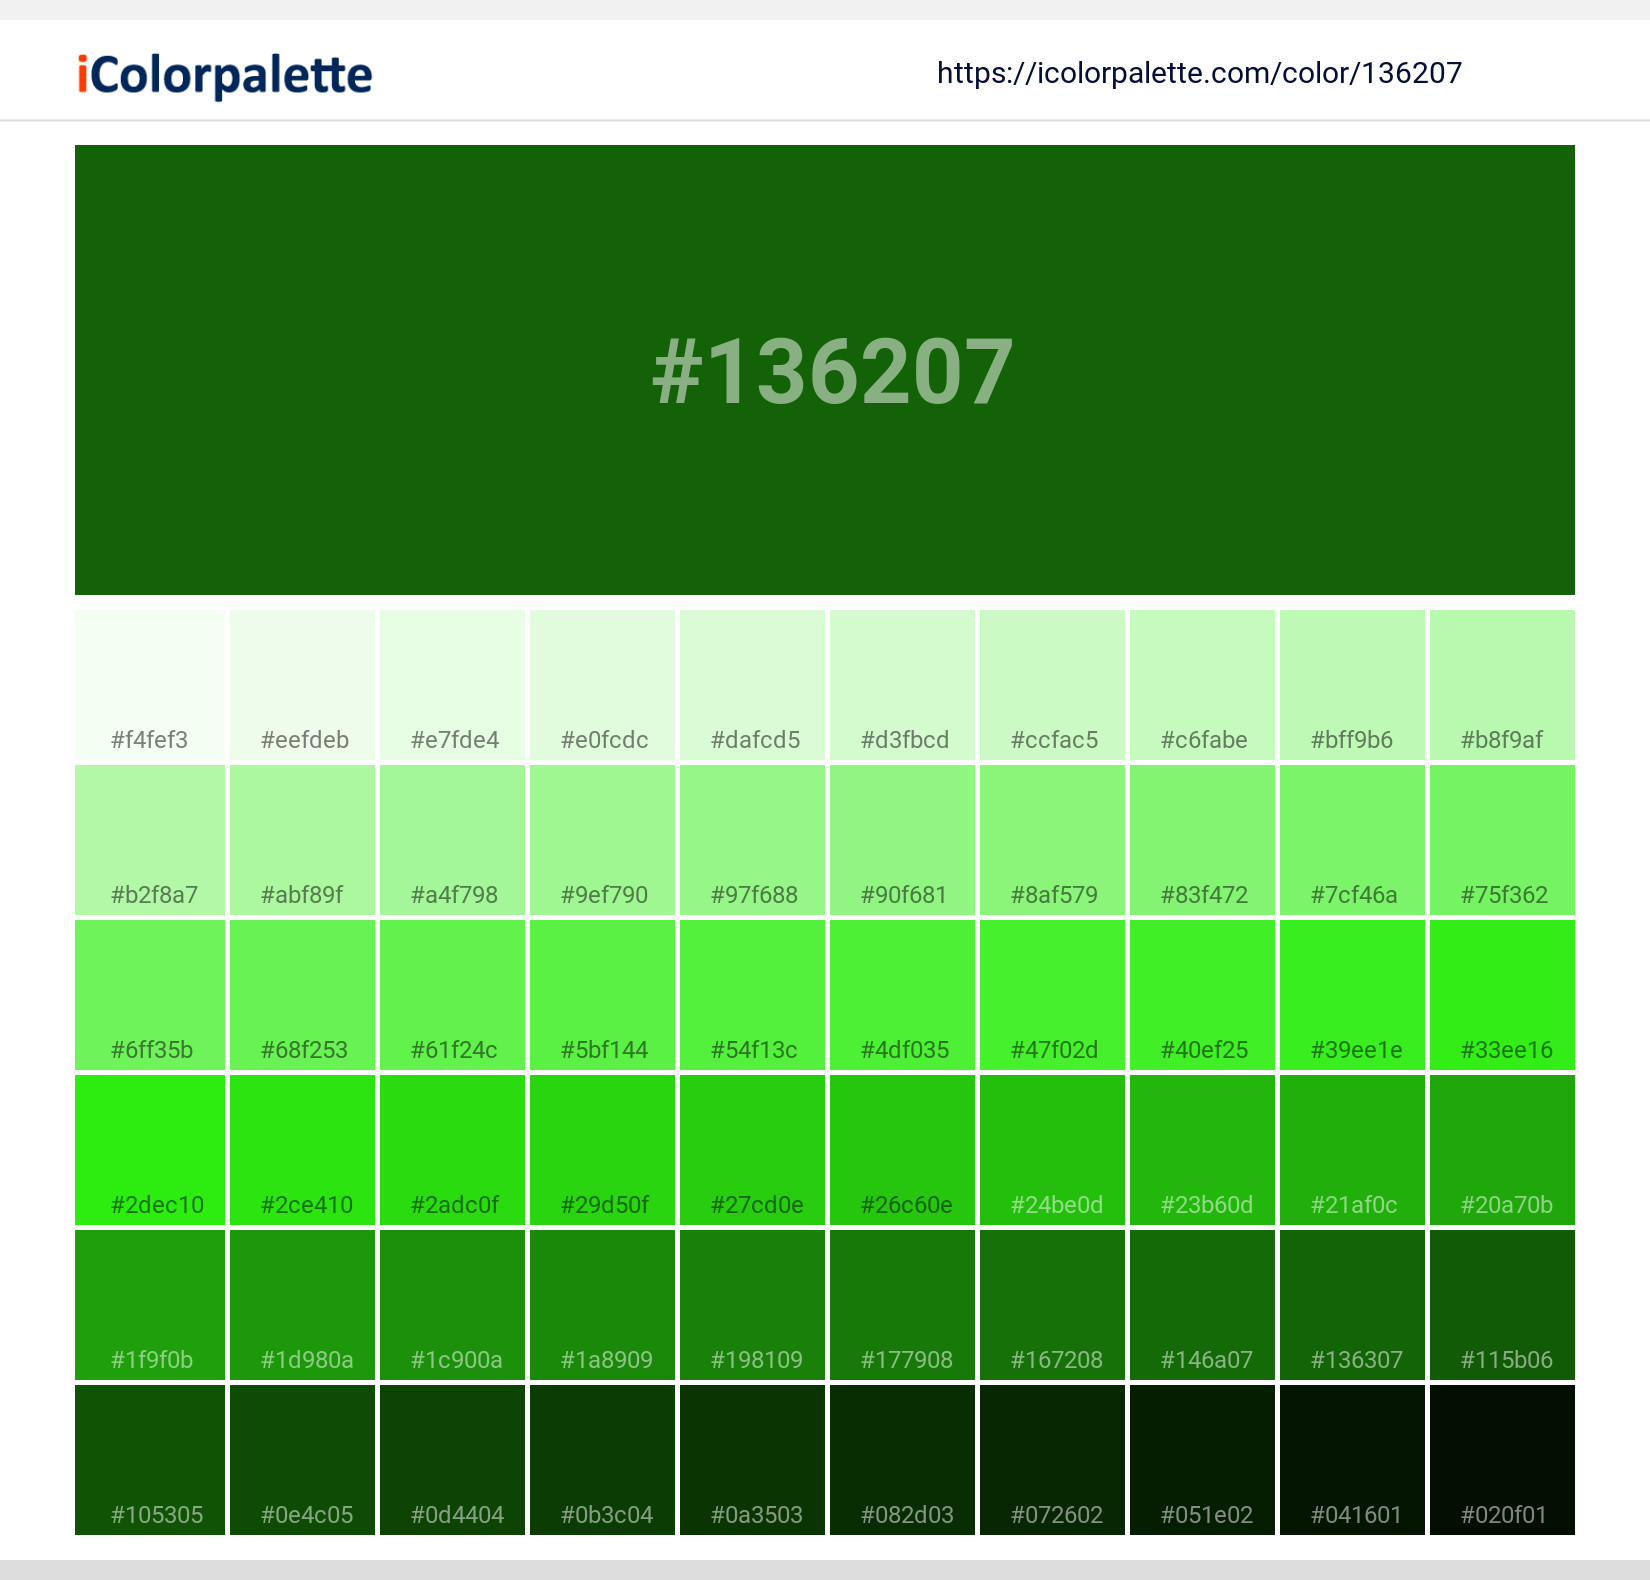 Lincoln Green ( similar ) Color, 136207 information, Hsl, Rgb